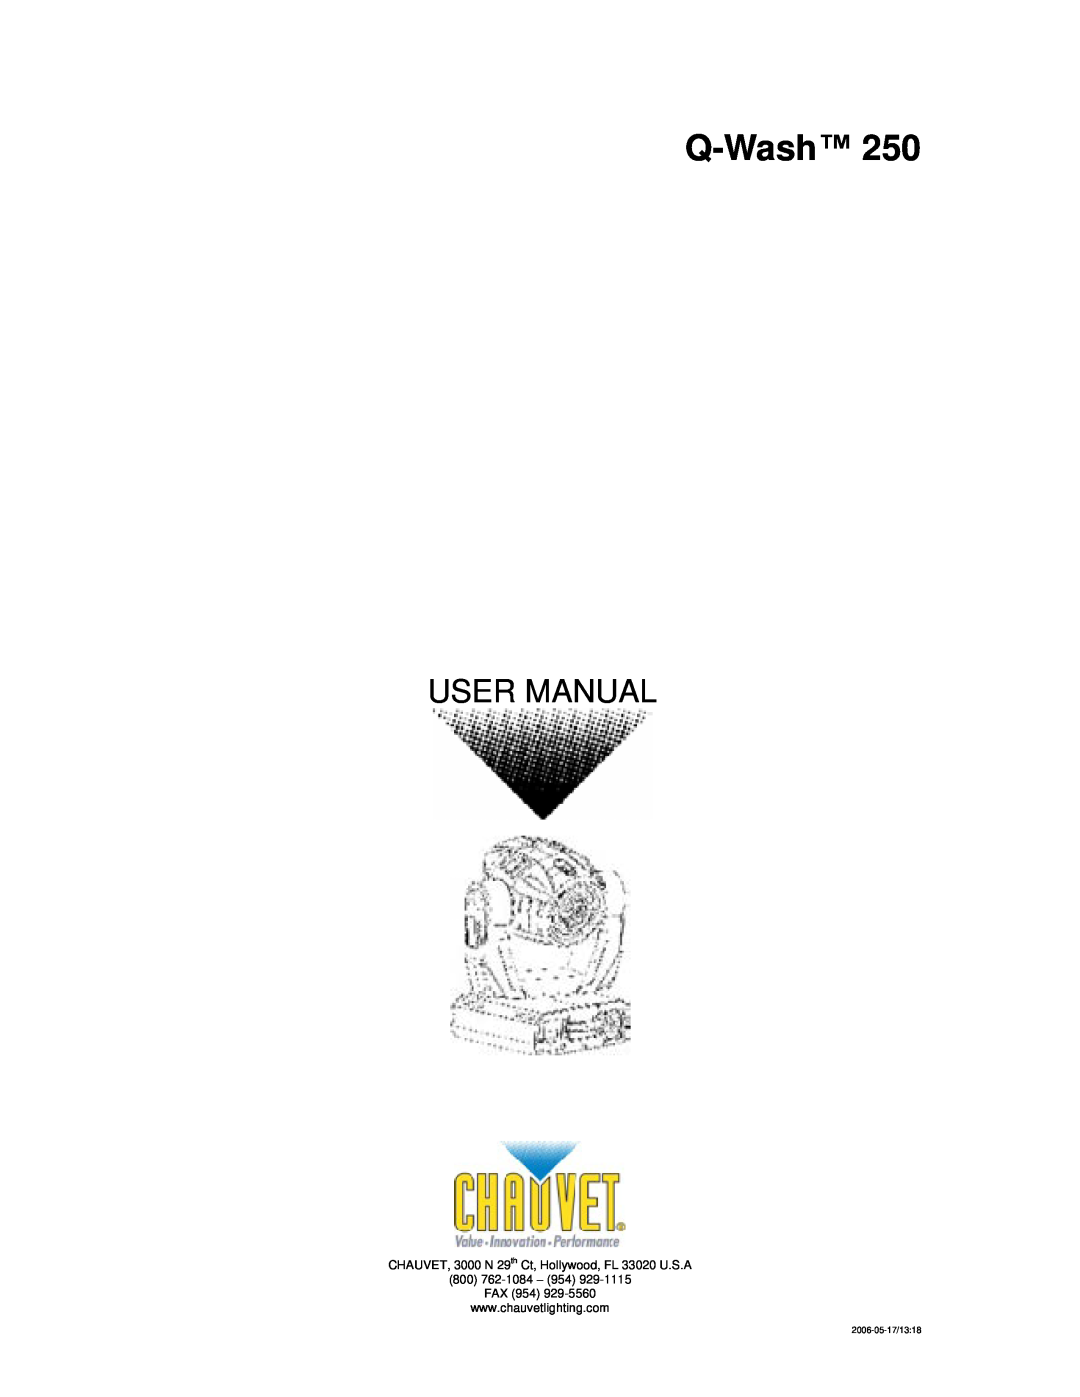 Chauvet 250 user manual Q-Wash, User Manual, 2006-05-17/13:18 